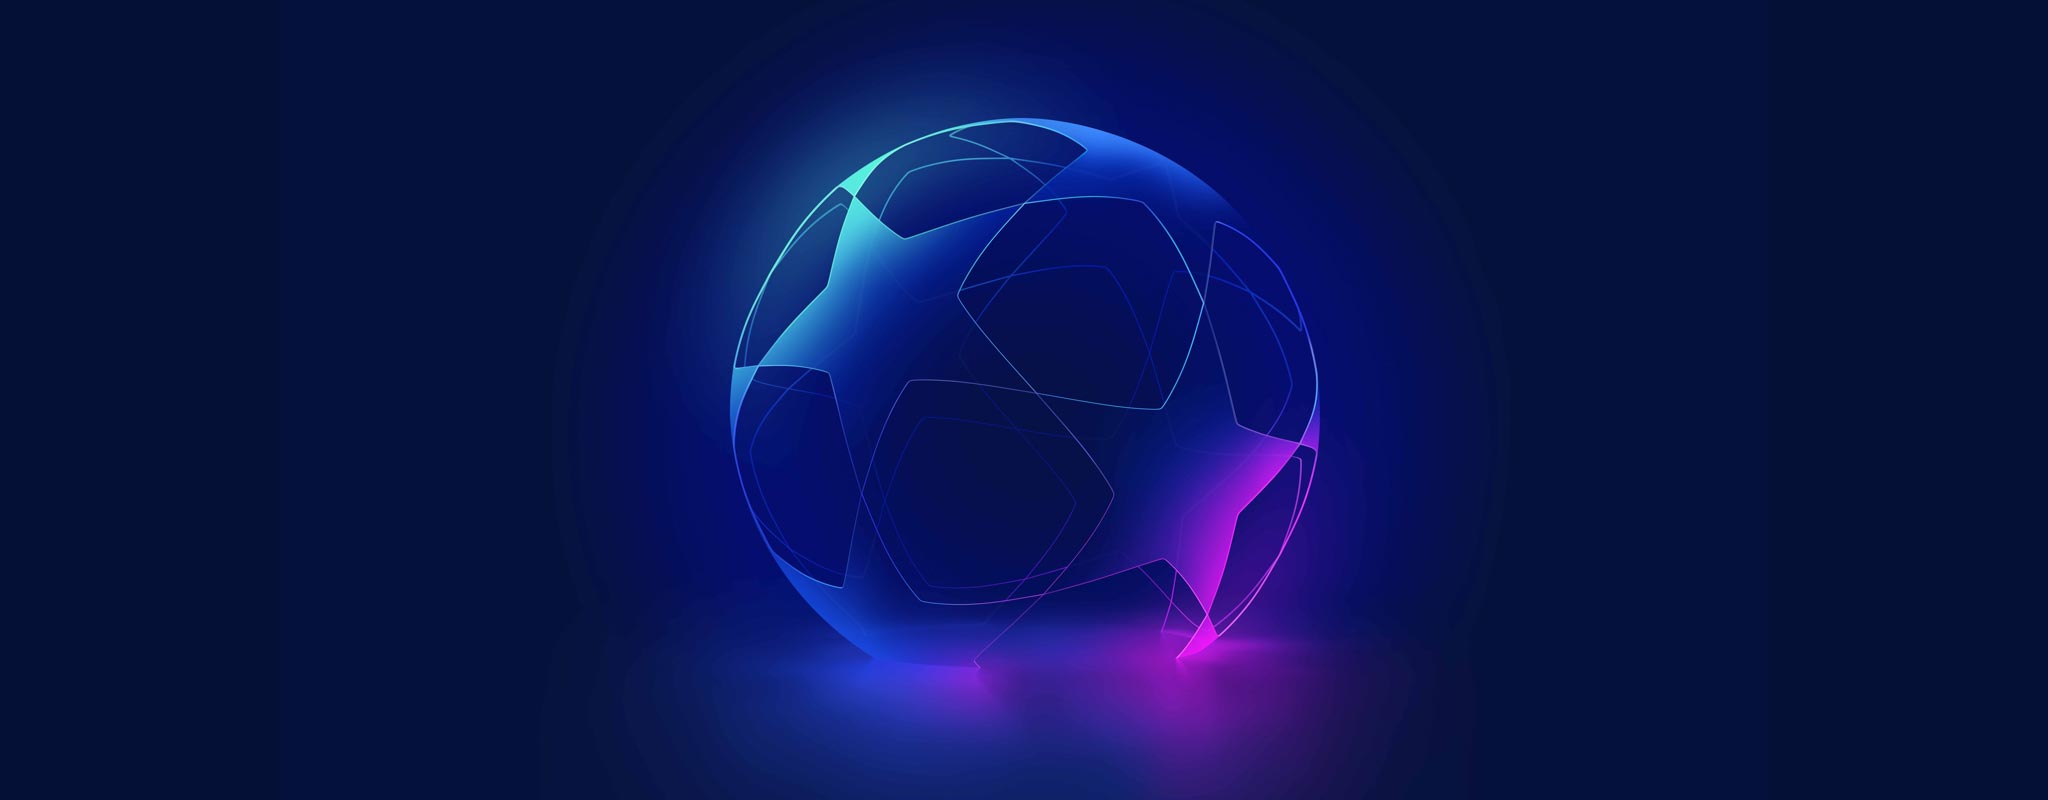 Uefa壁紙 青い エレクトリックブルー サッカーボール フットボール 世界 Wallpaperuse